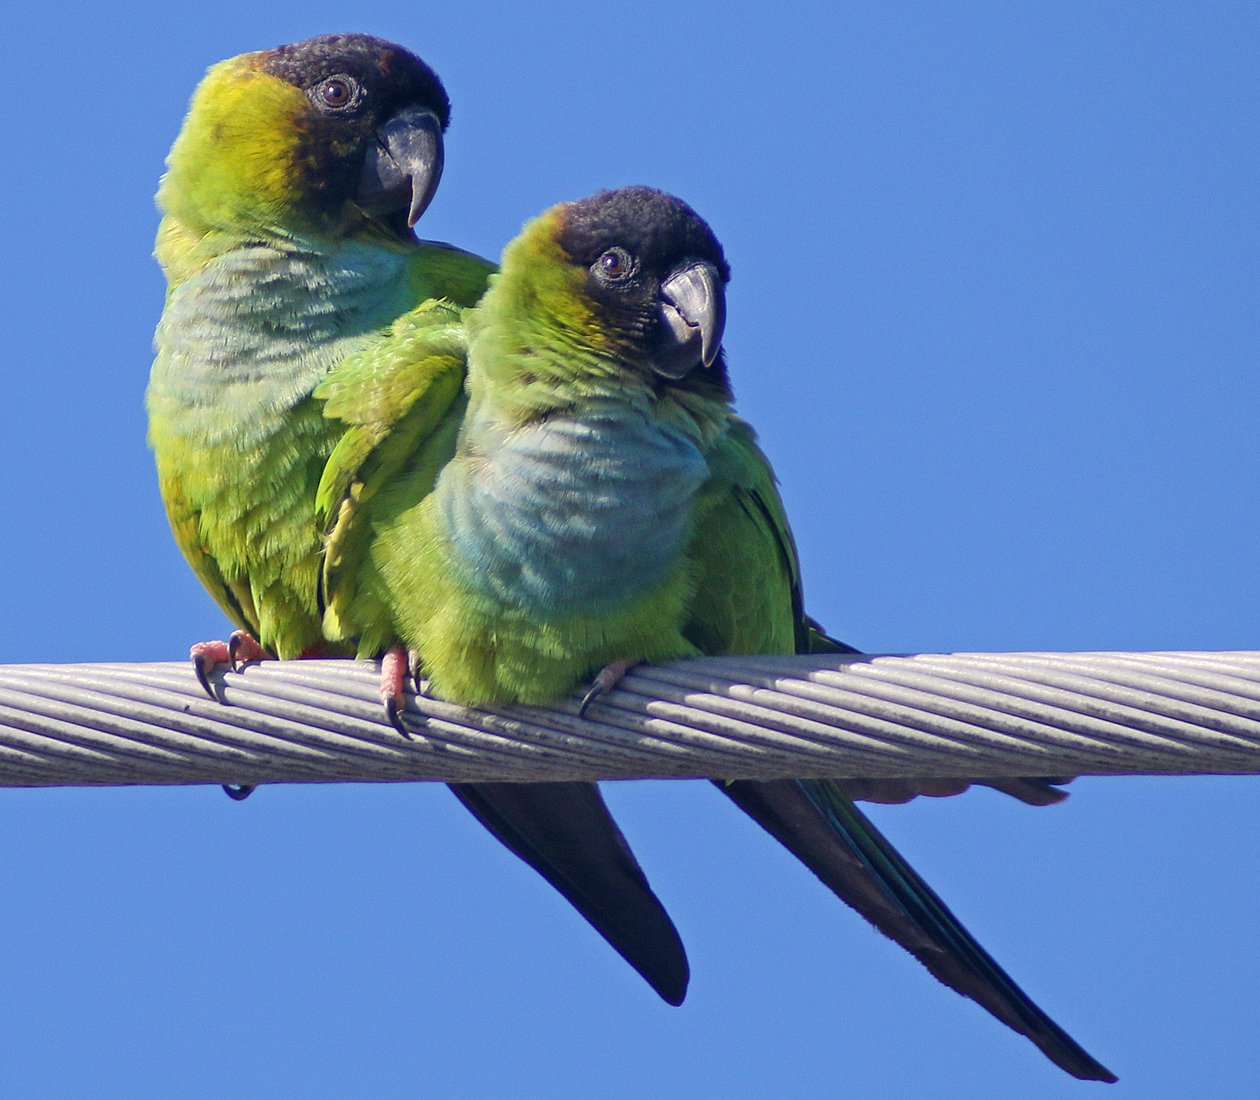 Nanday Parakeets cuddling